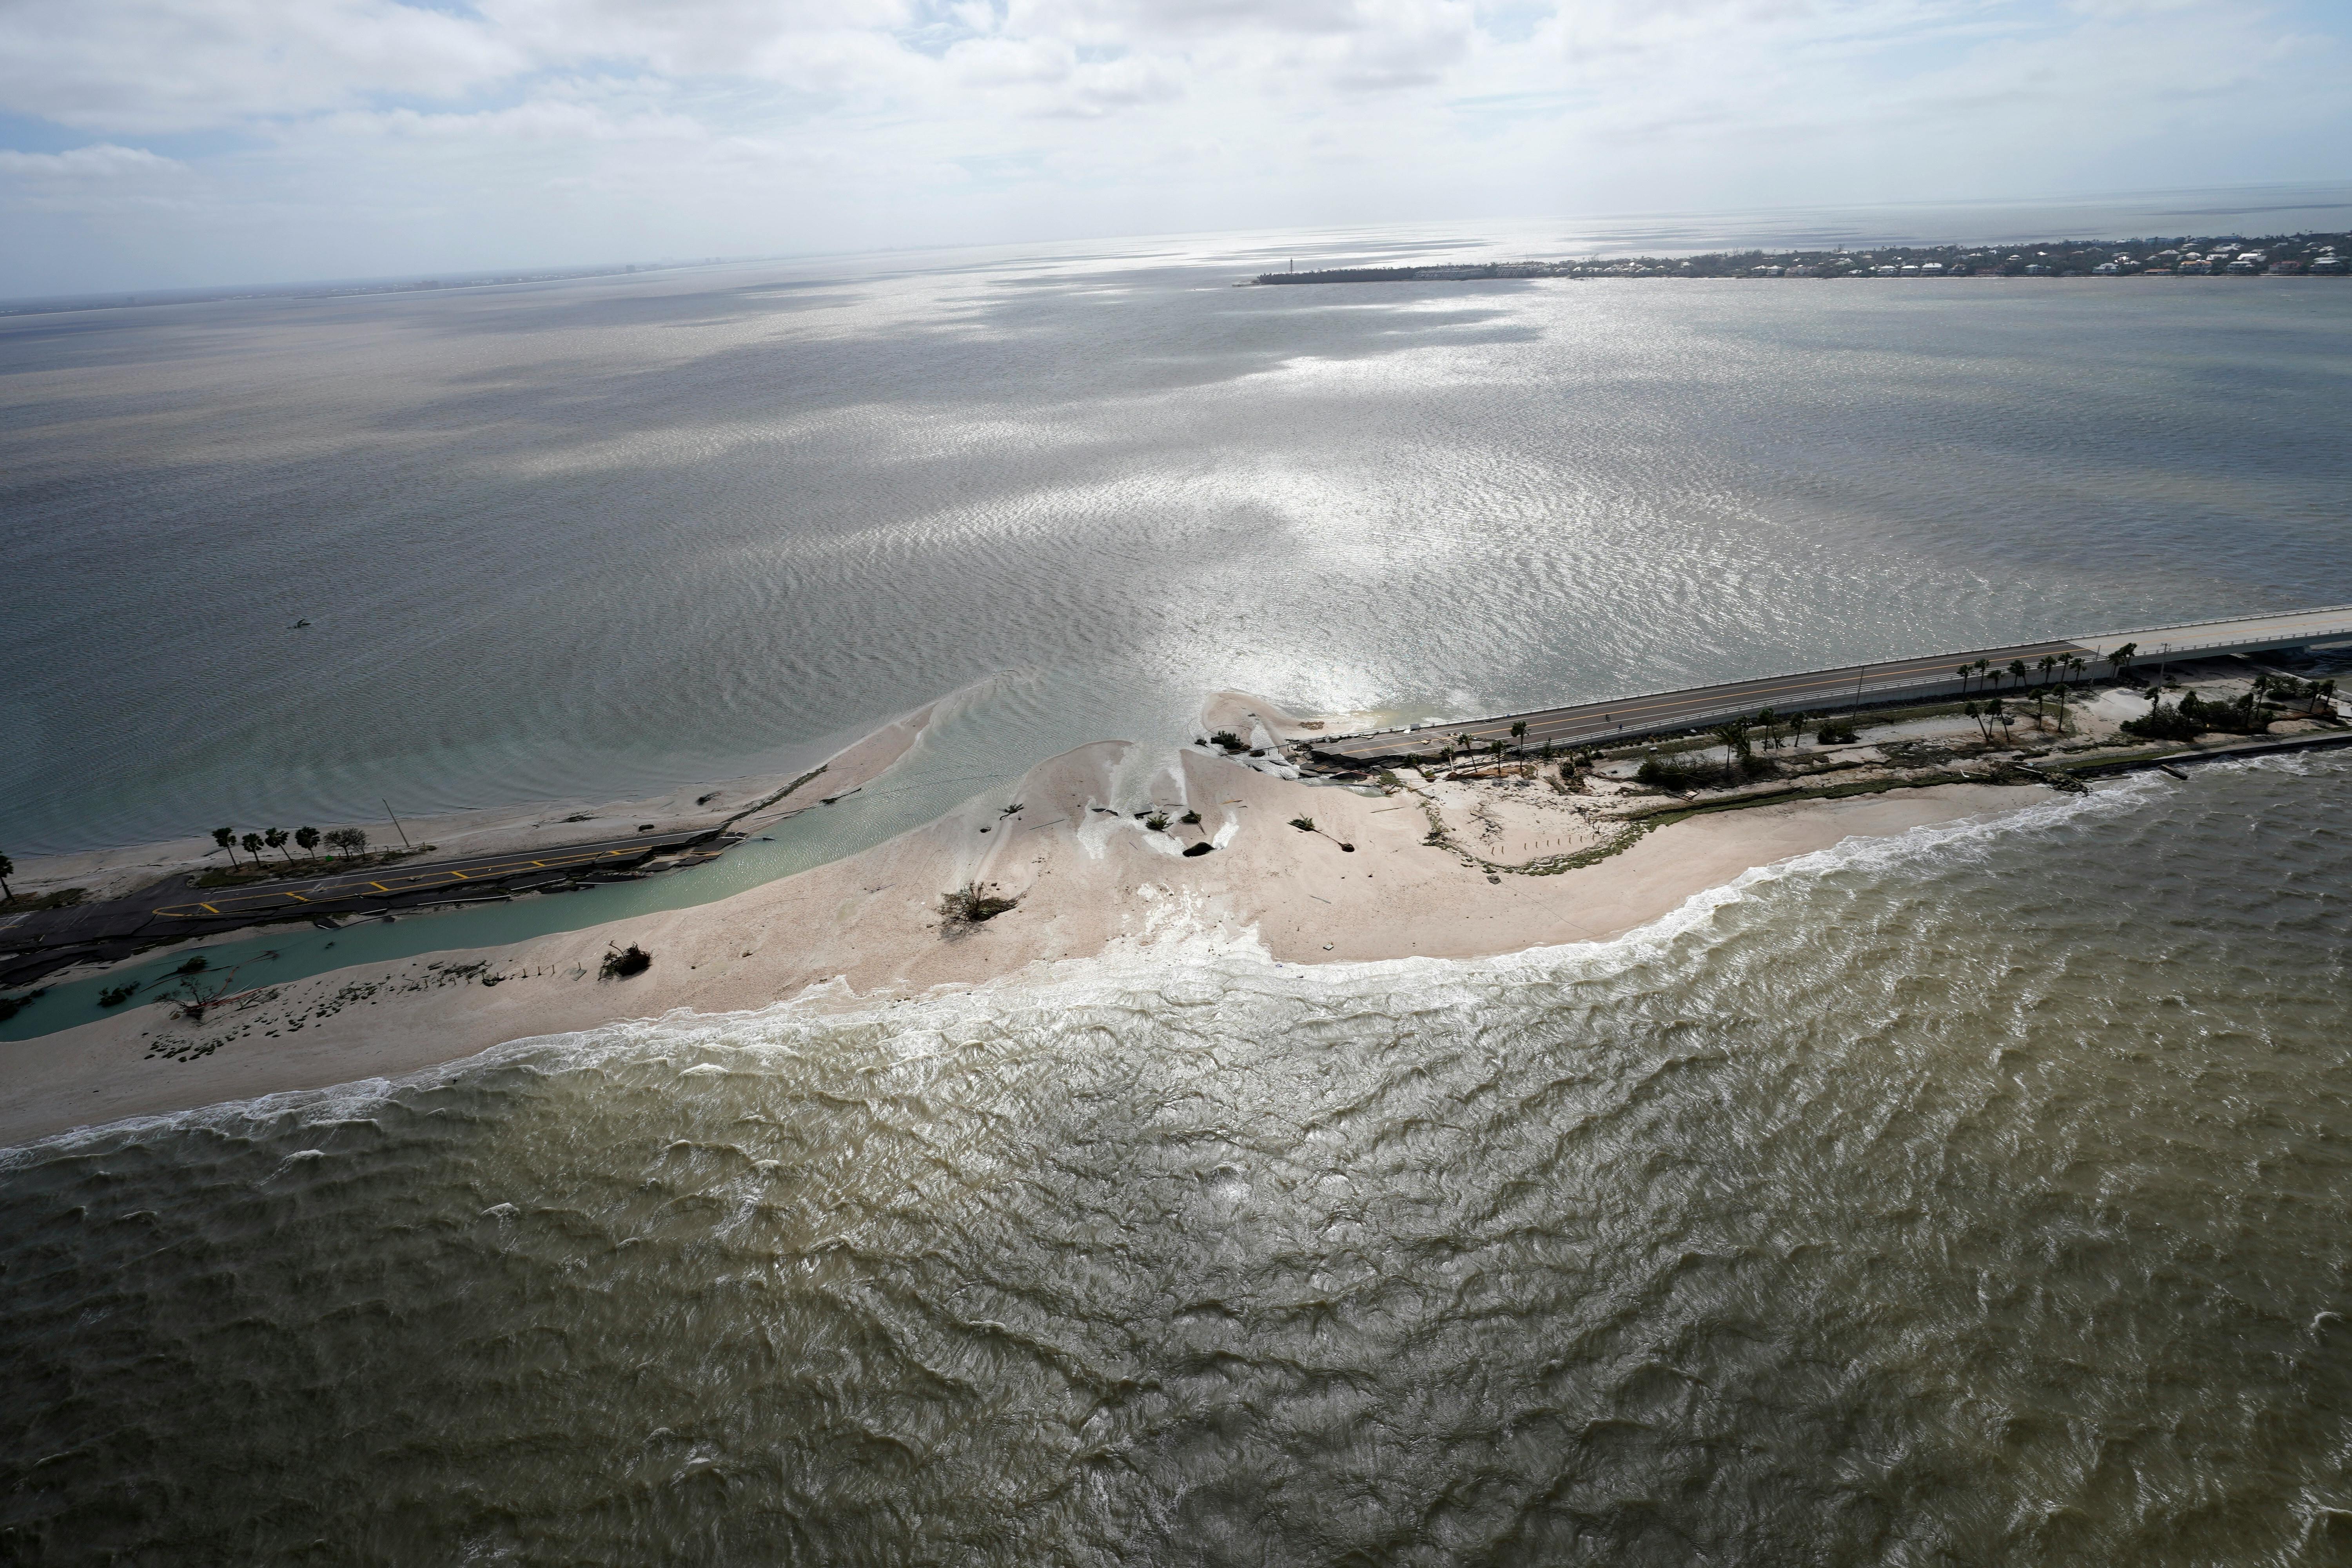 Ian-ravaged Sanibel Island was an antidote to Florida development